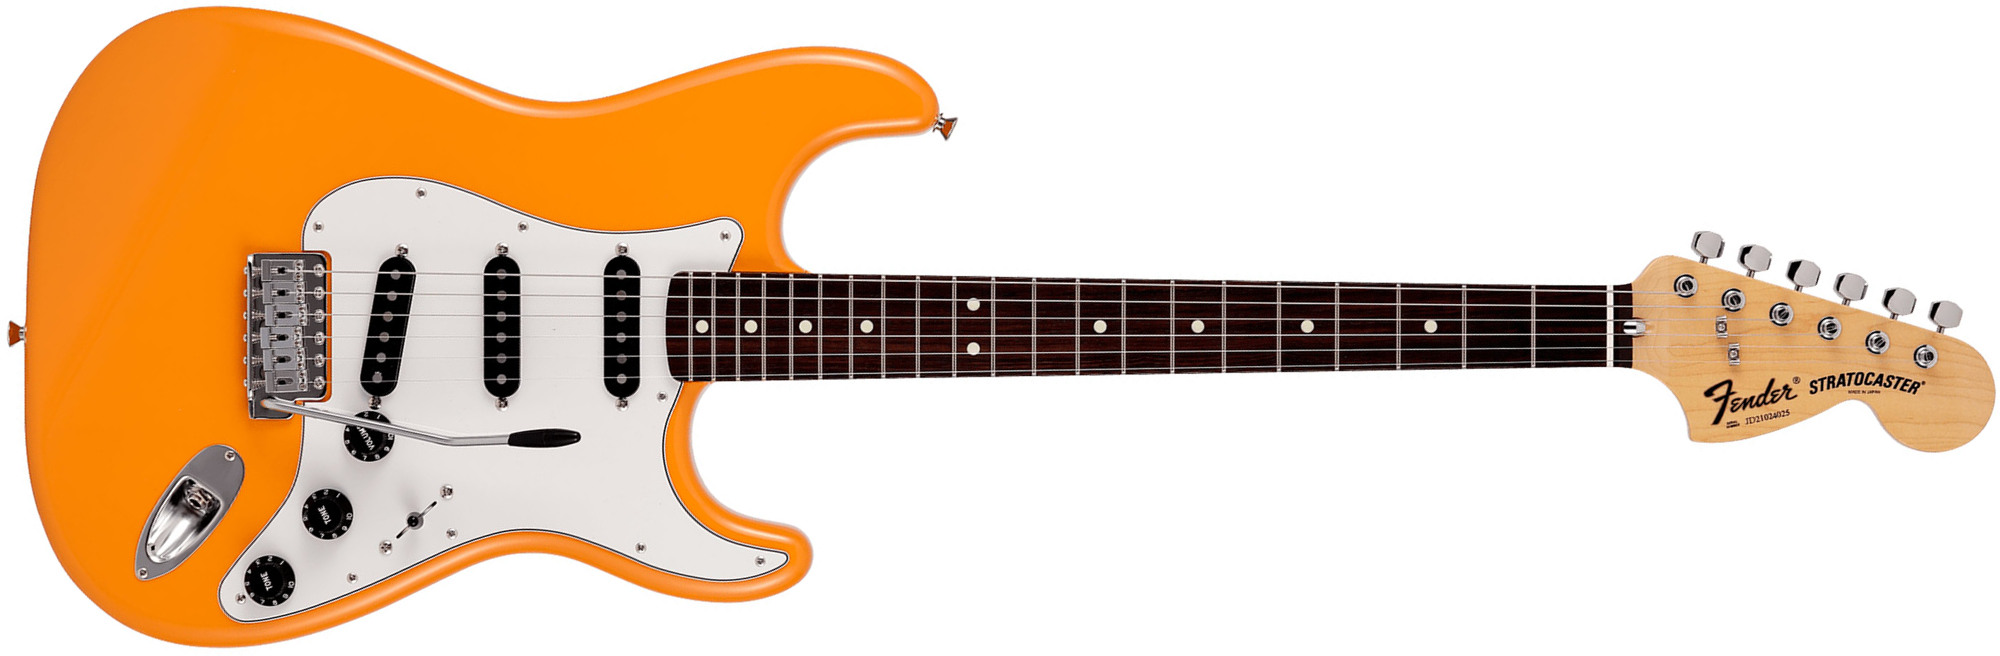 Fender Strat International Color Ltd Jap 3s Trem Rw - Capri Orange - Str shape electric guitar - Main picture